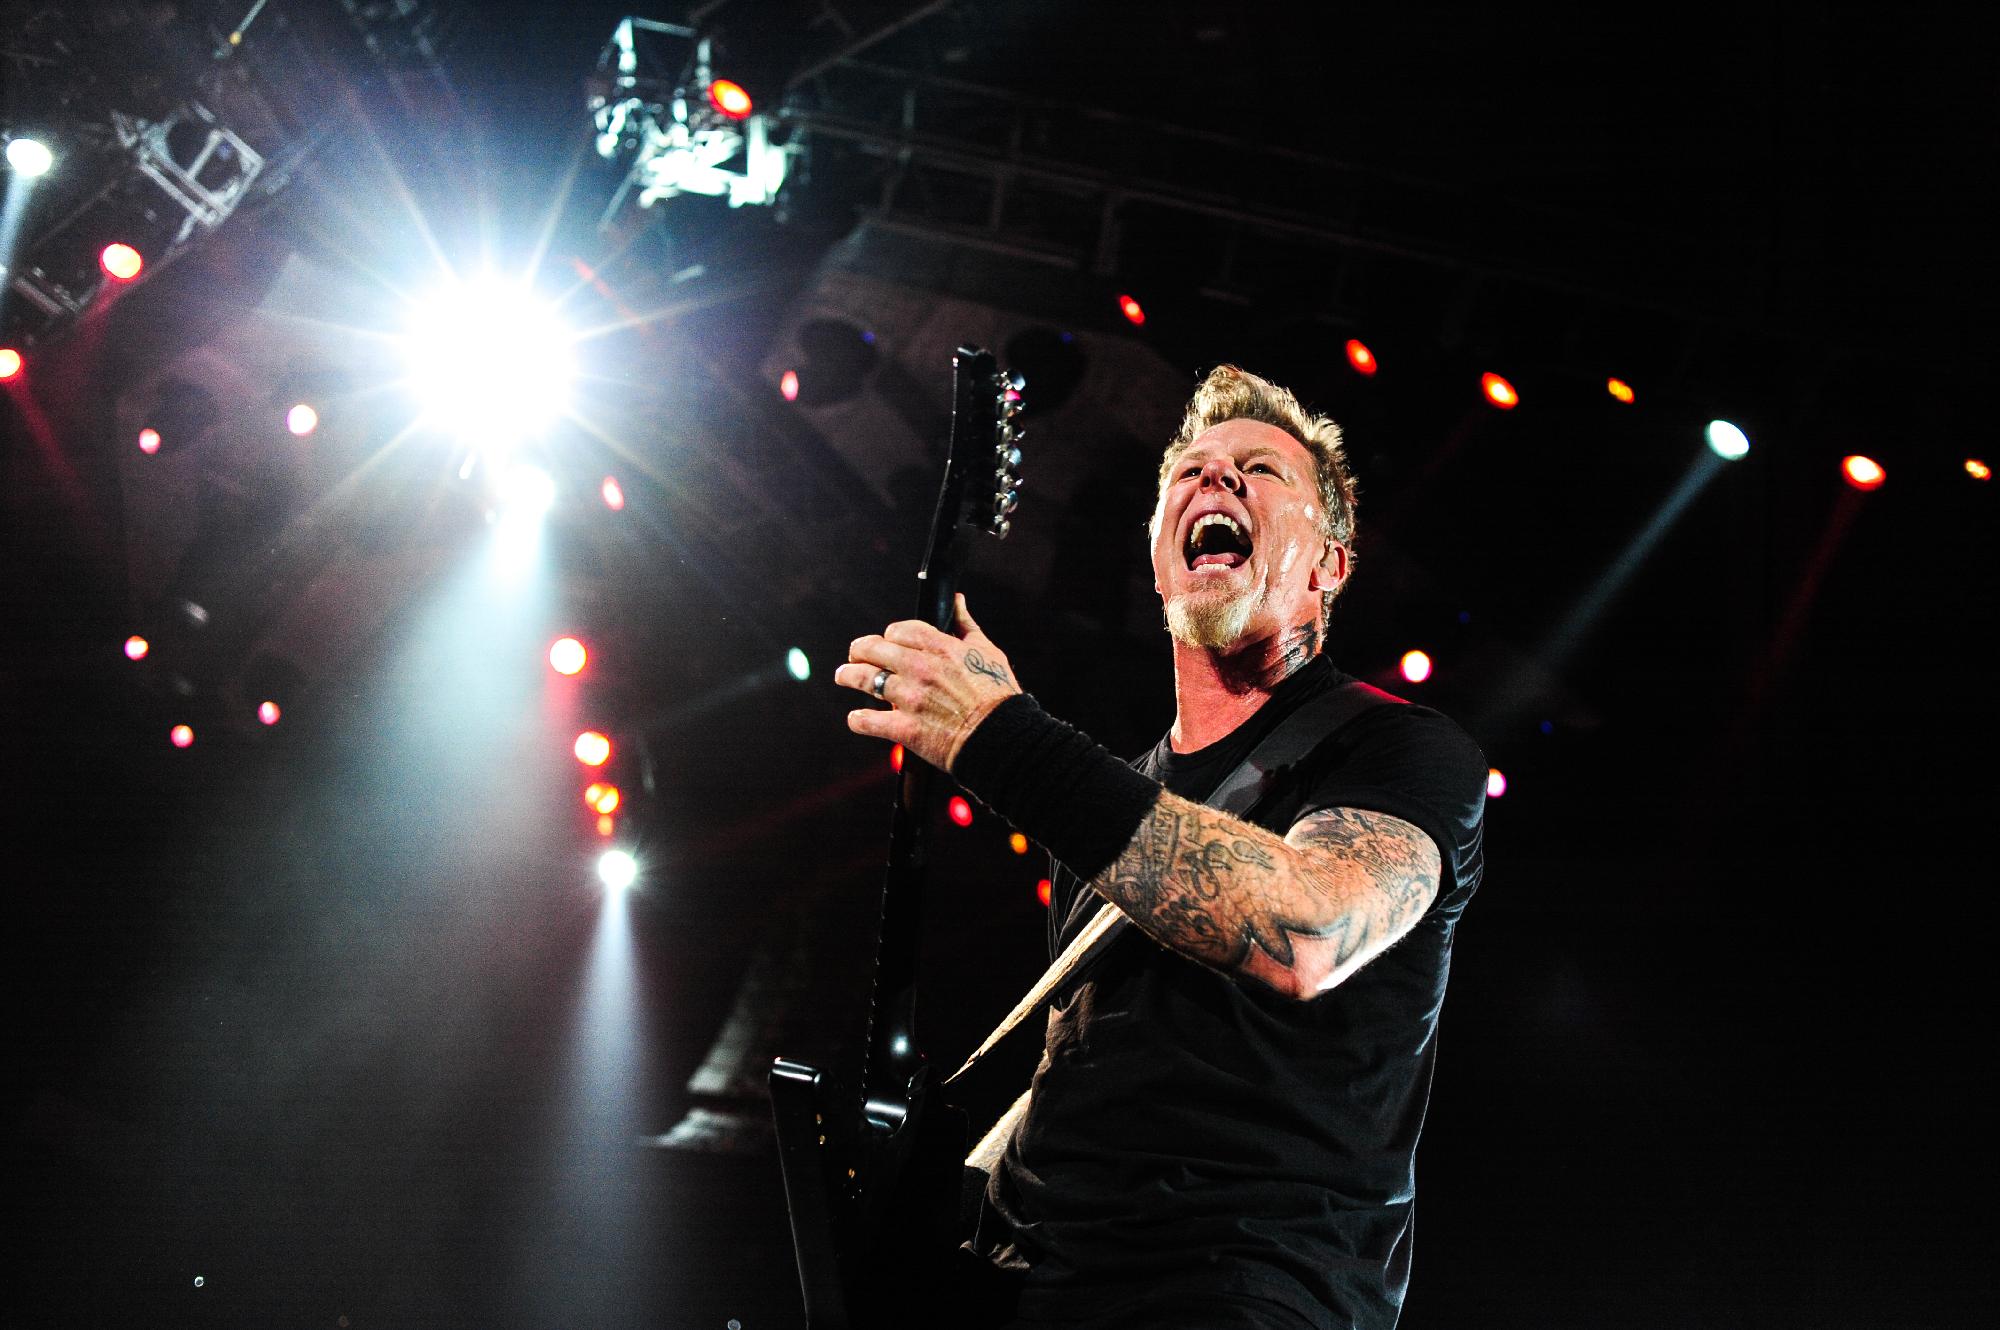 Metallica-albumpremier magyar mozikban is